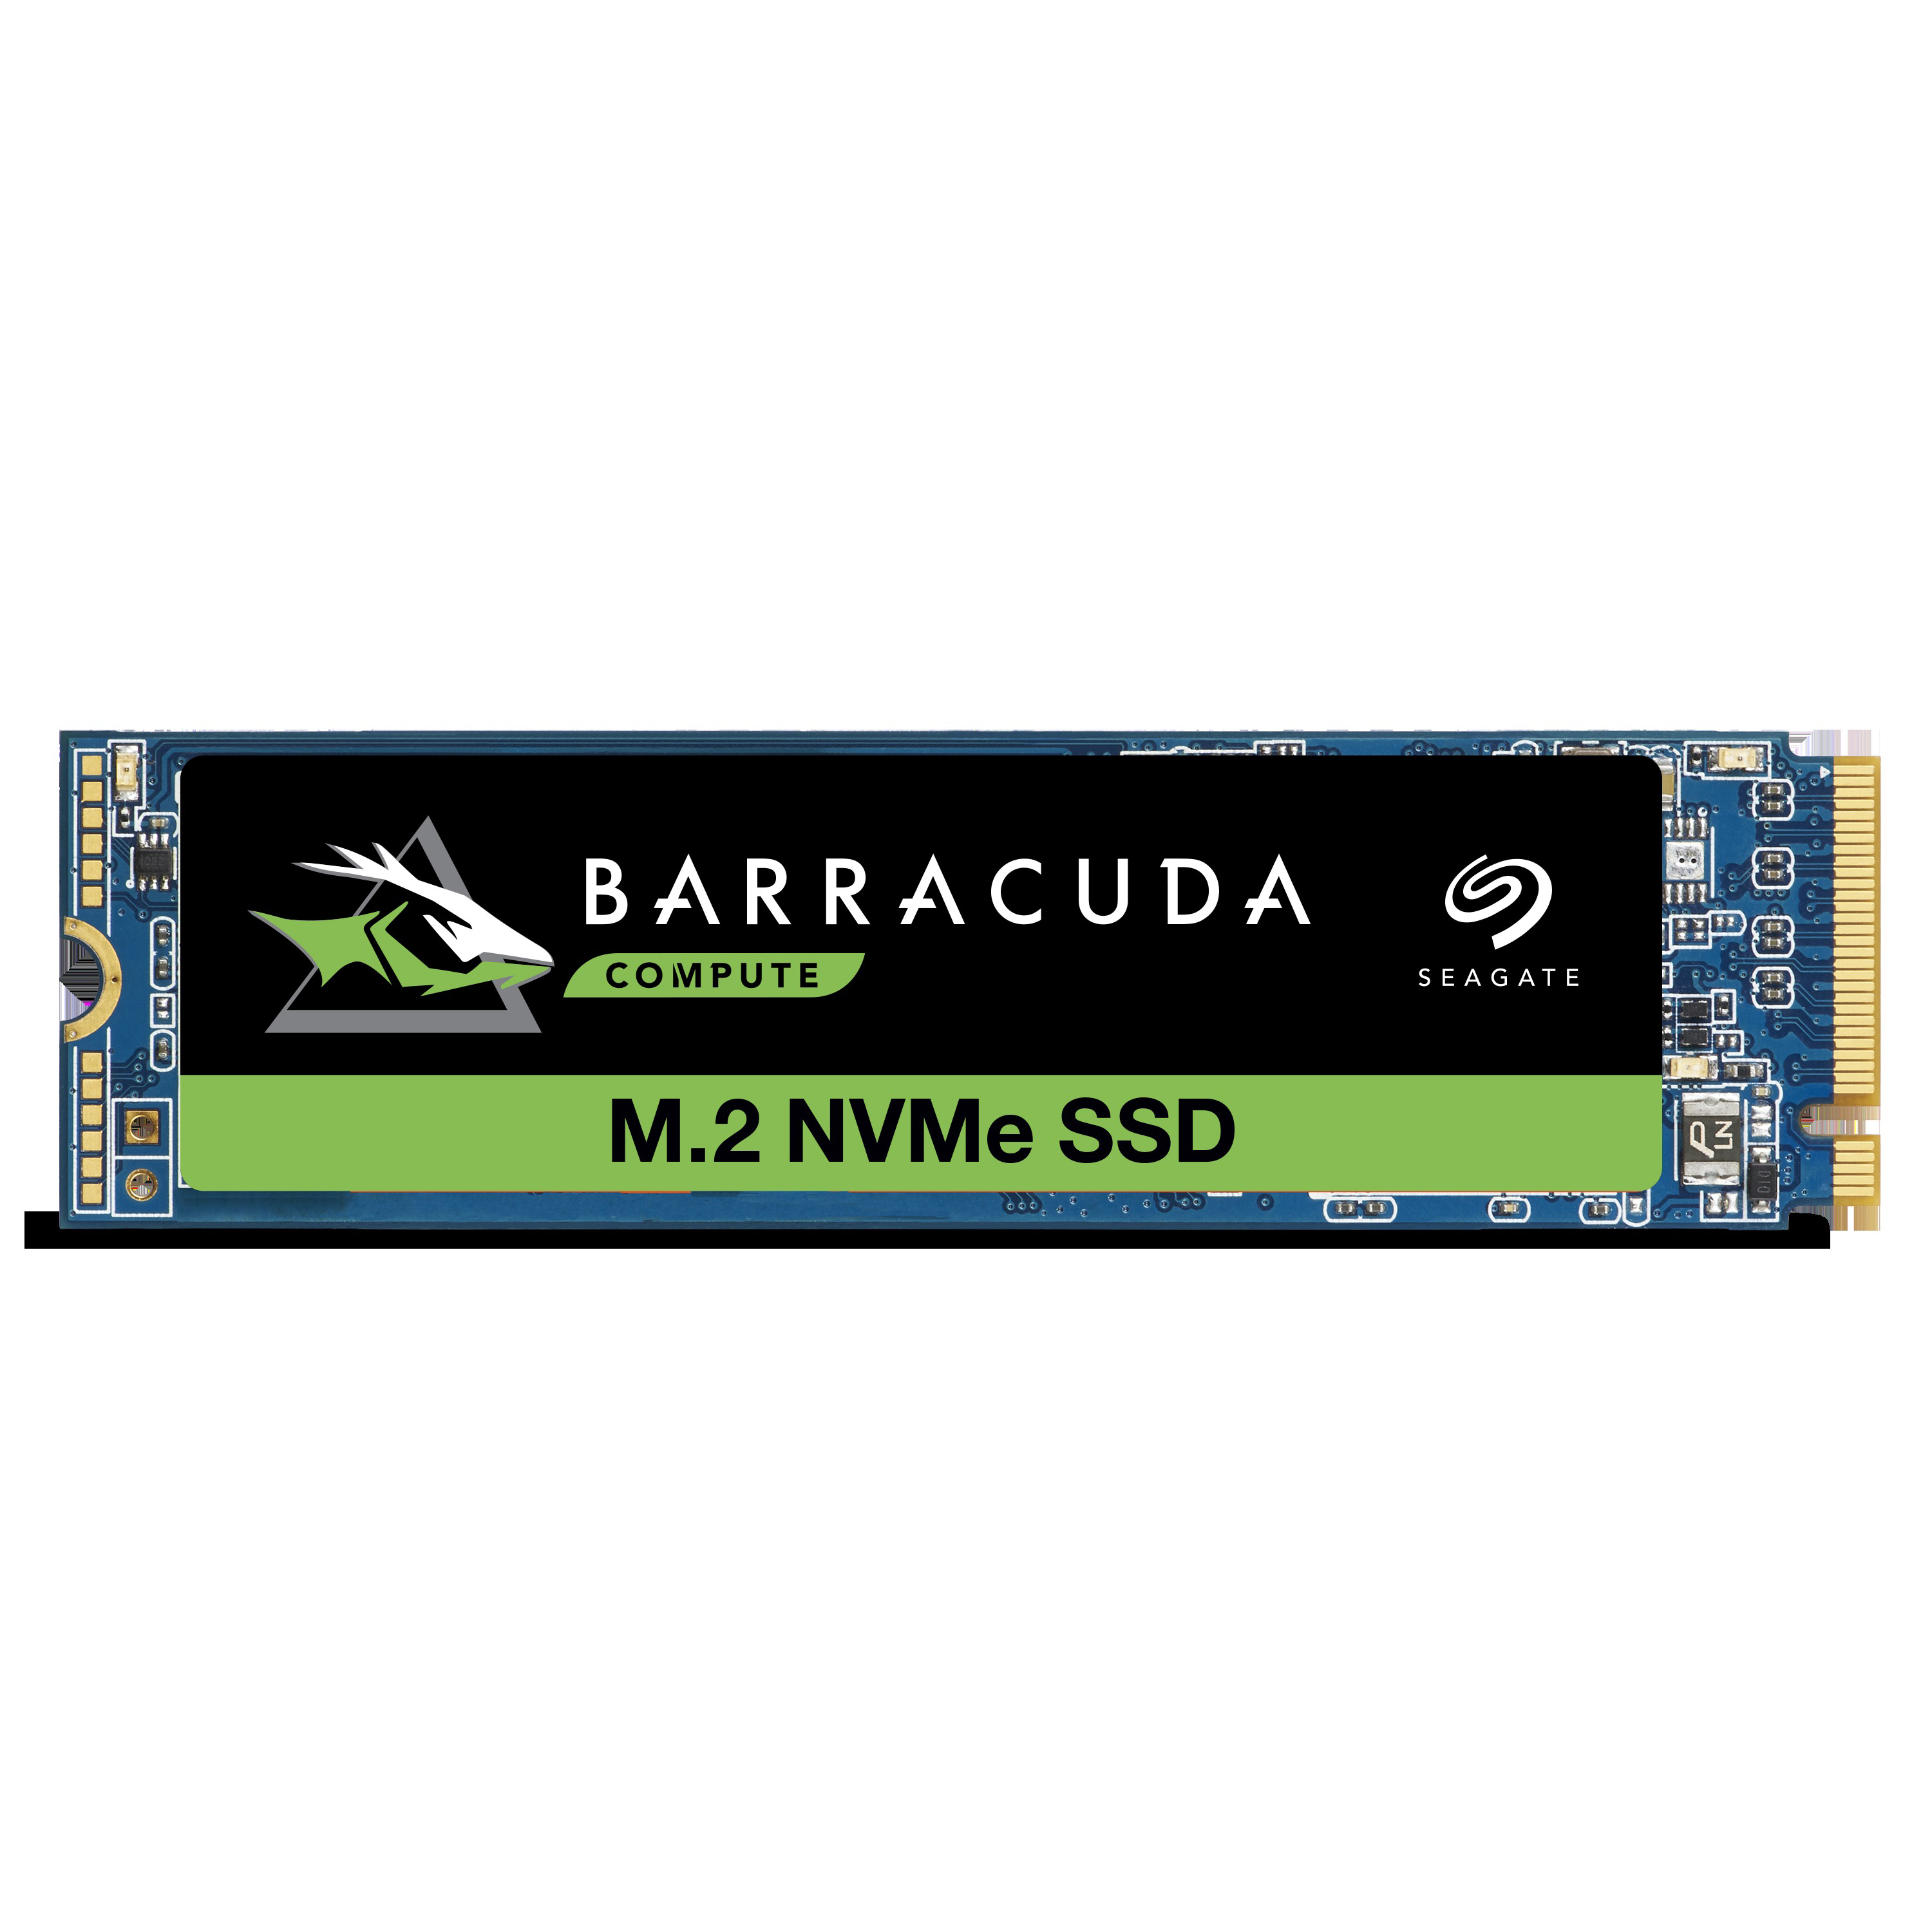 256 ZP256CM30041 PCIe, SEAGATE GB SSD M.2 510 via intern Retail, Festplatte BARRACUDA